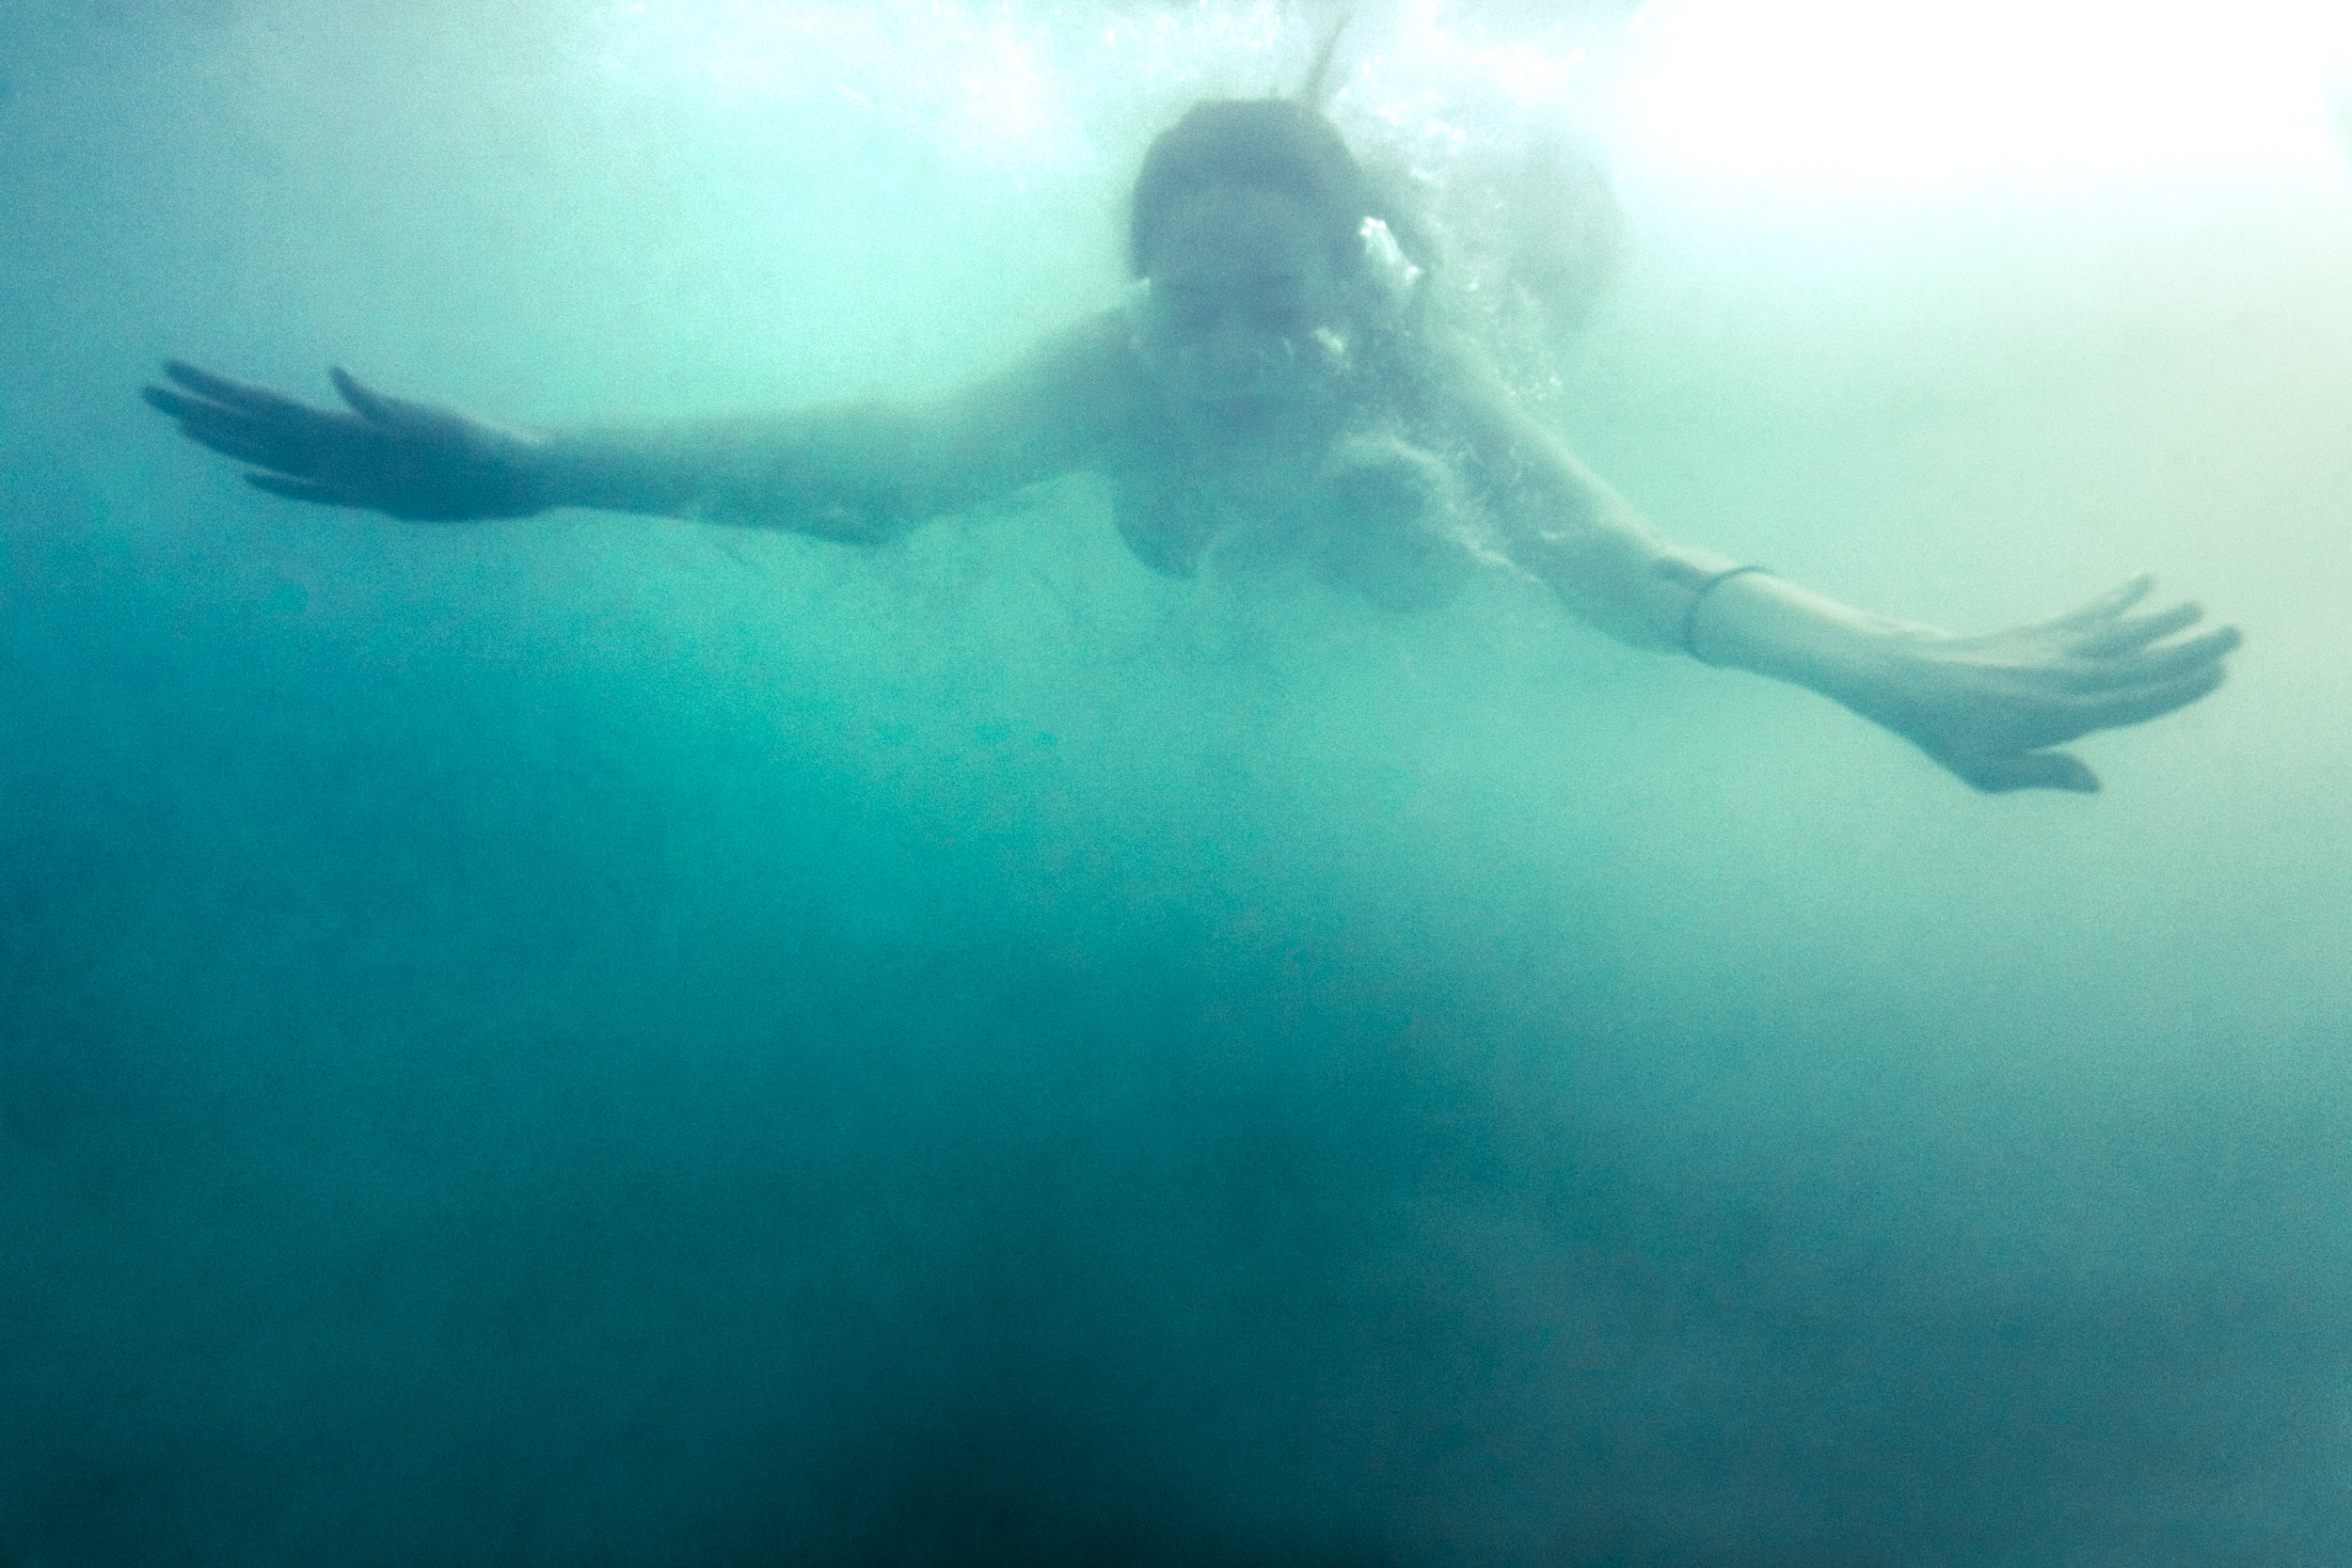 Free Diving